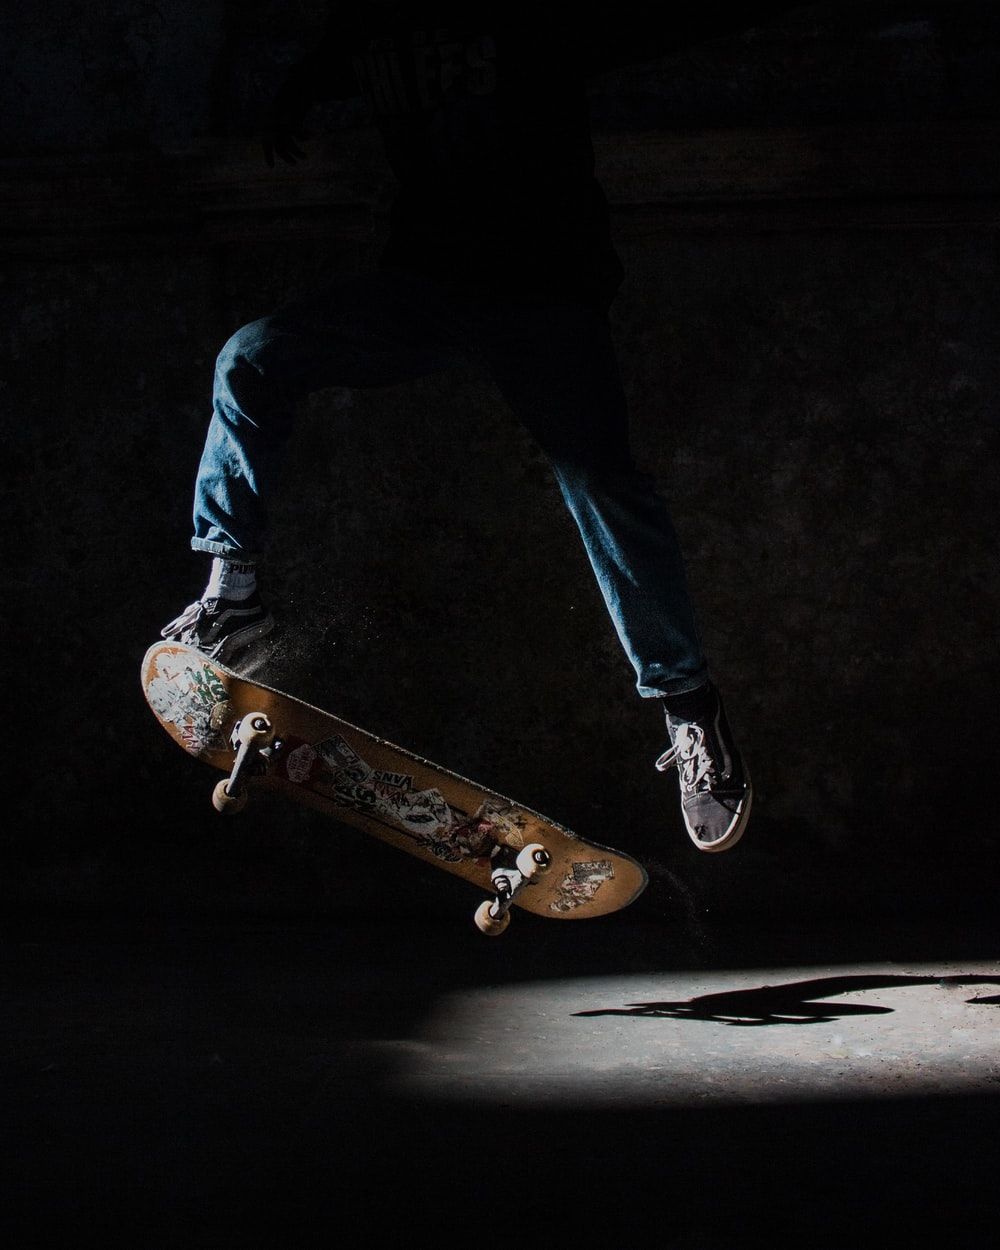 Skateboard Wallpapers: Free HD Download [500+ HQ]